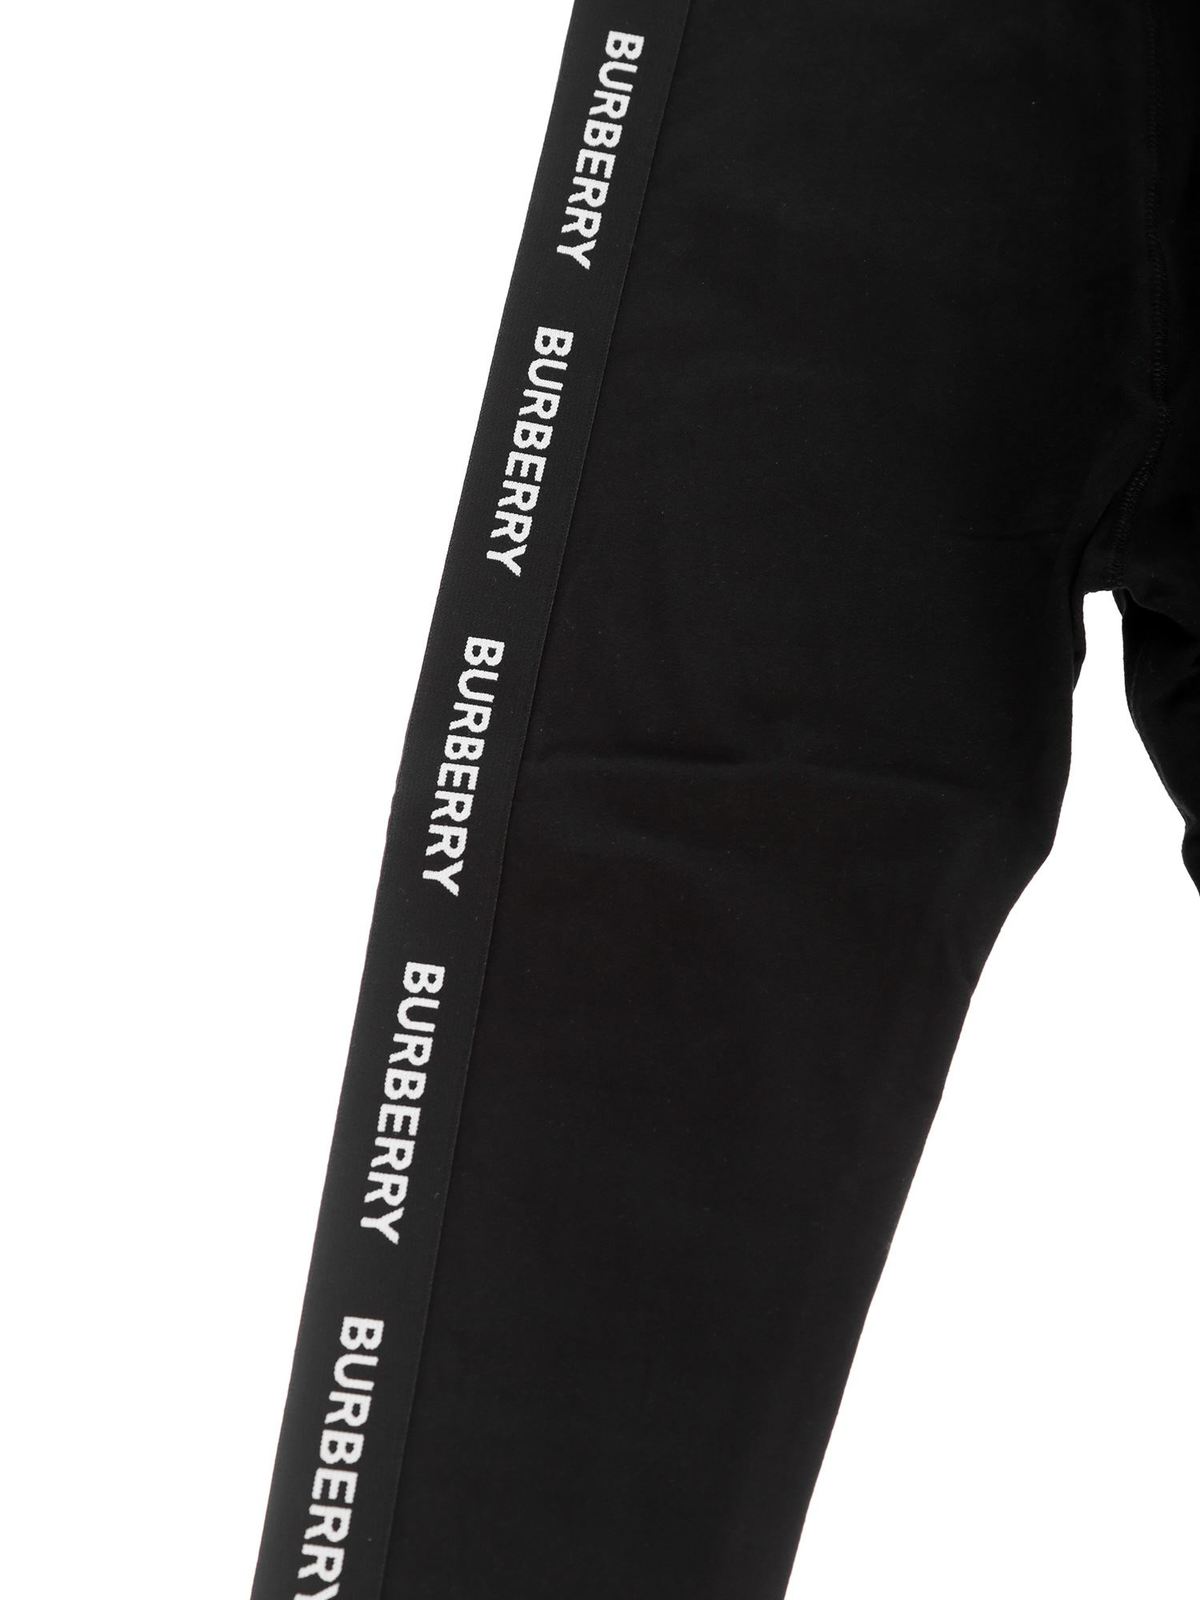 Leggings Burberry - Krista leggings - 8011007 | Shop online at iKRIX